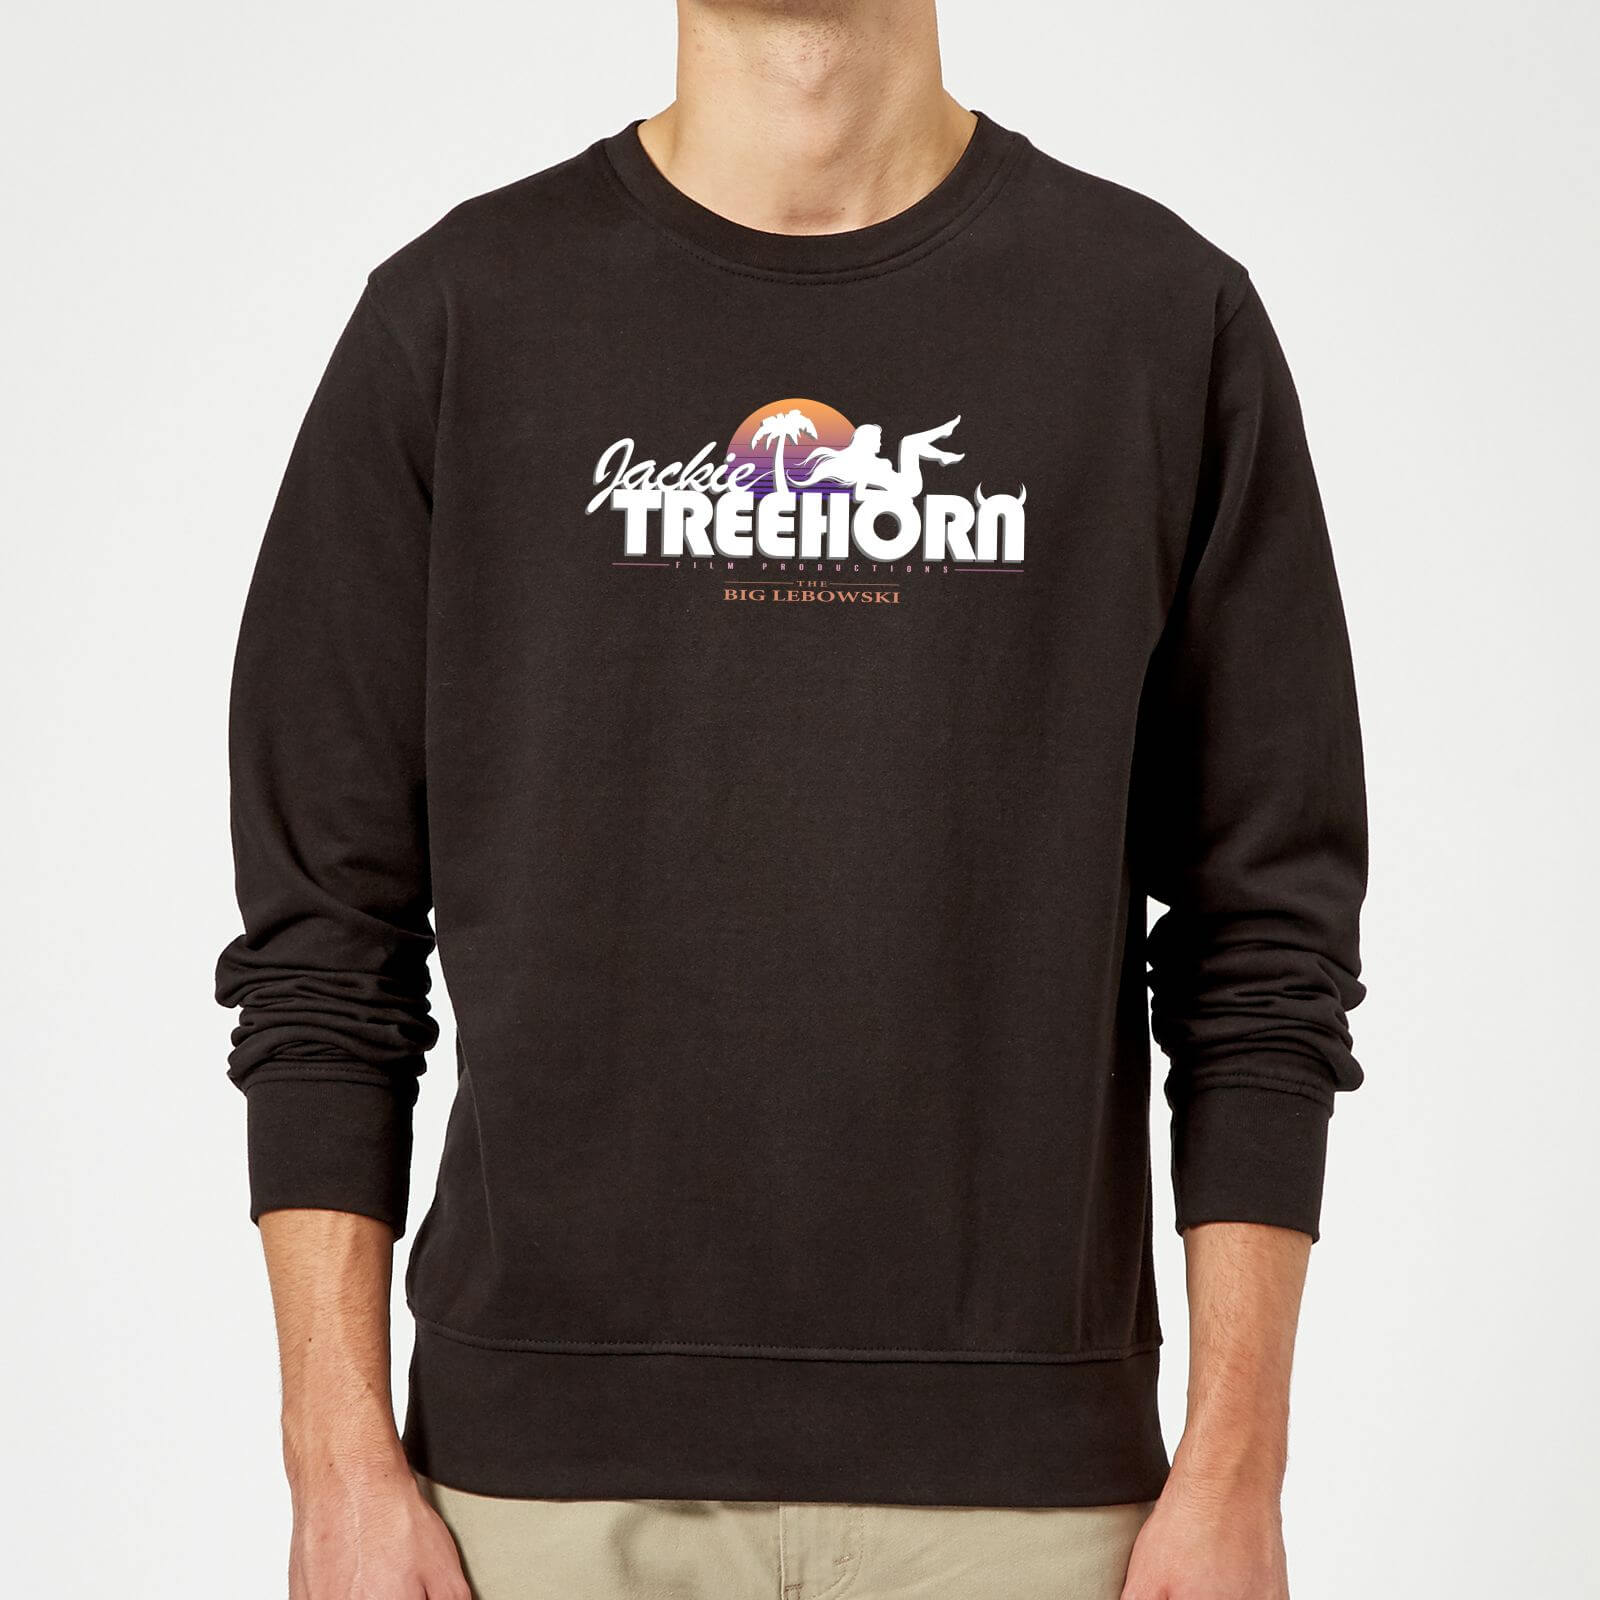 The Big Lebowski Treehorn Logo Sweatshirt - Black - S - Black